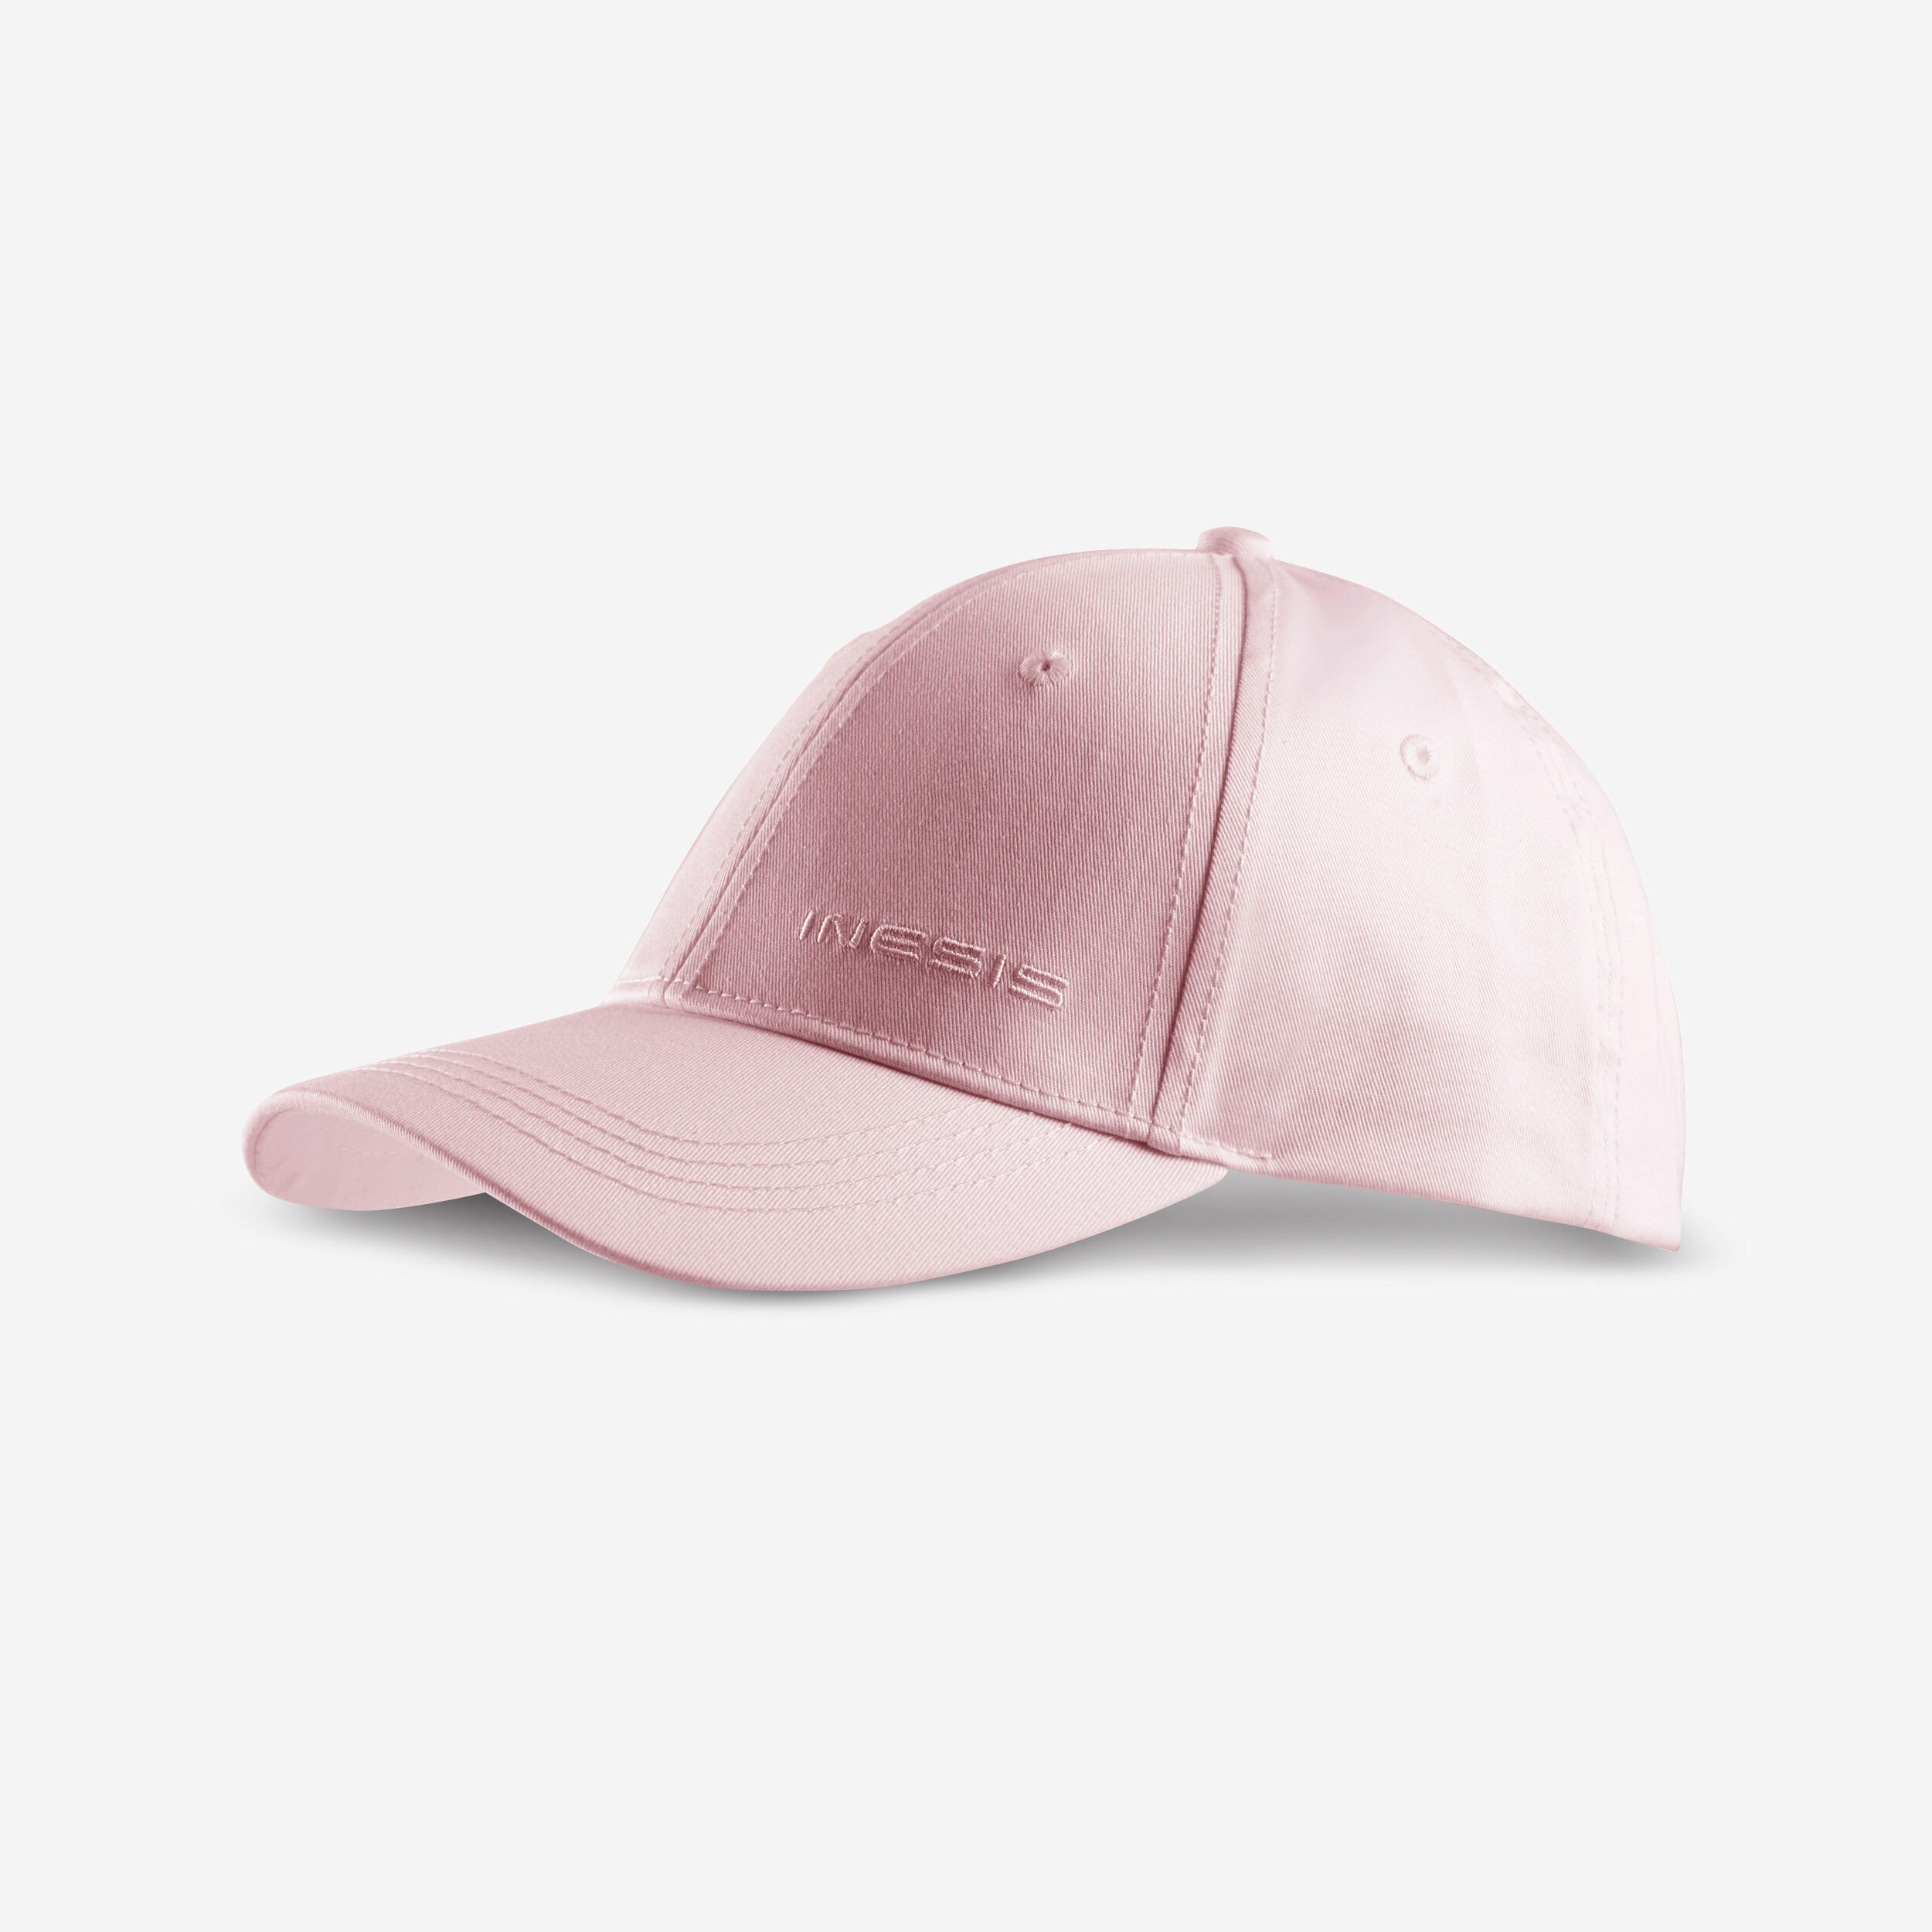 Adult's golf cap - MW 500 pink 1/3